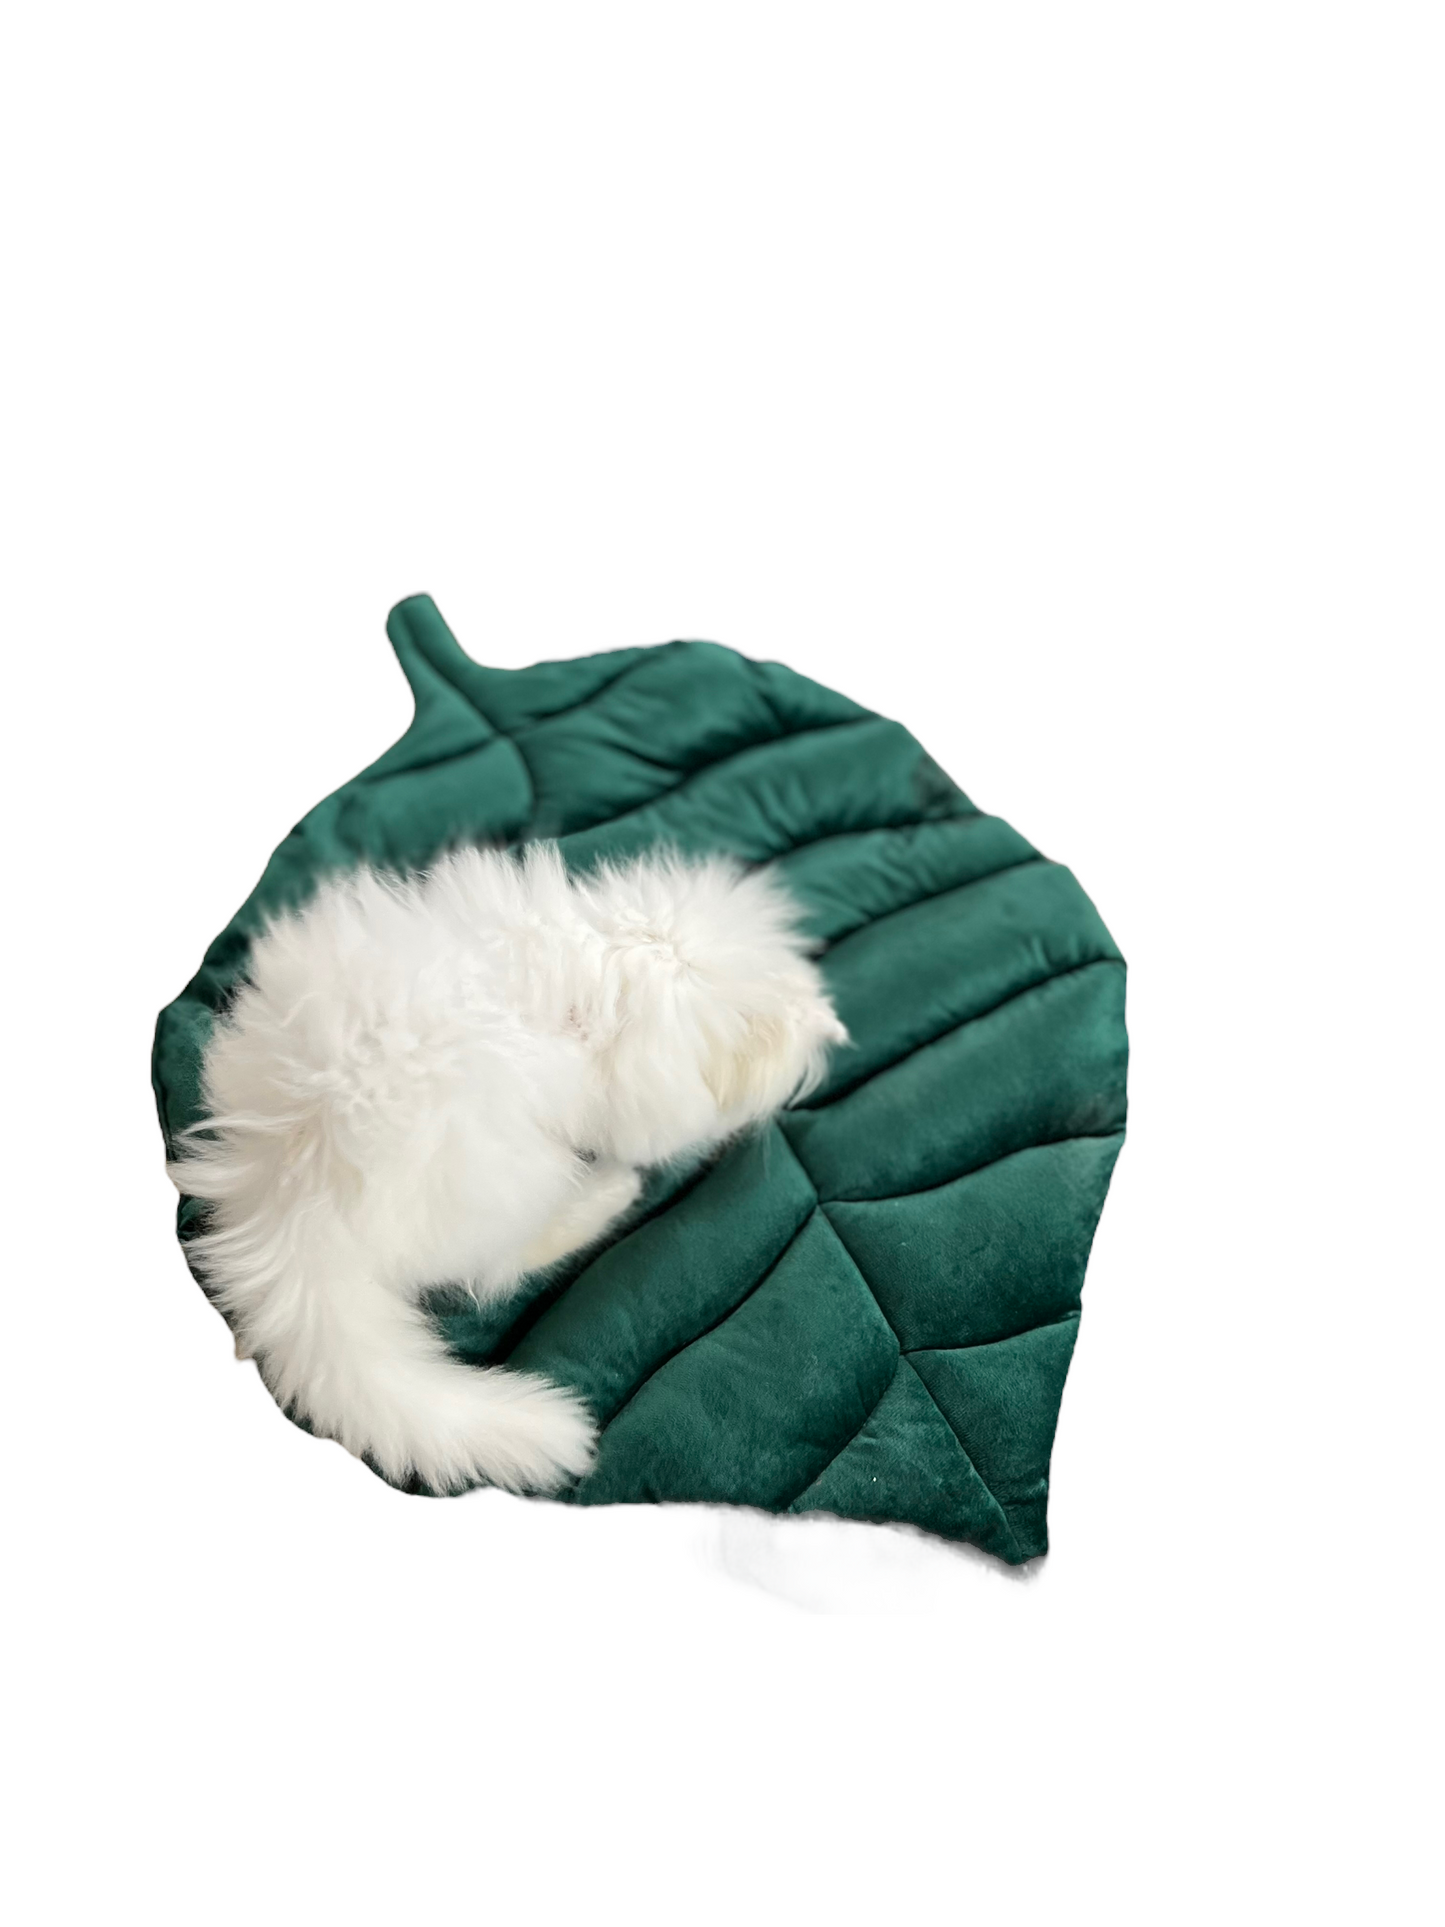 Leaf pet cushion 🍃